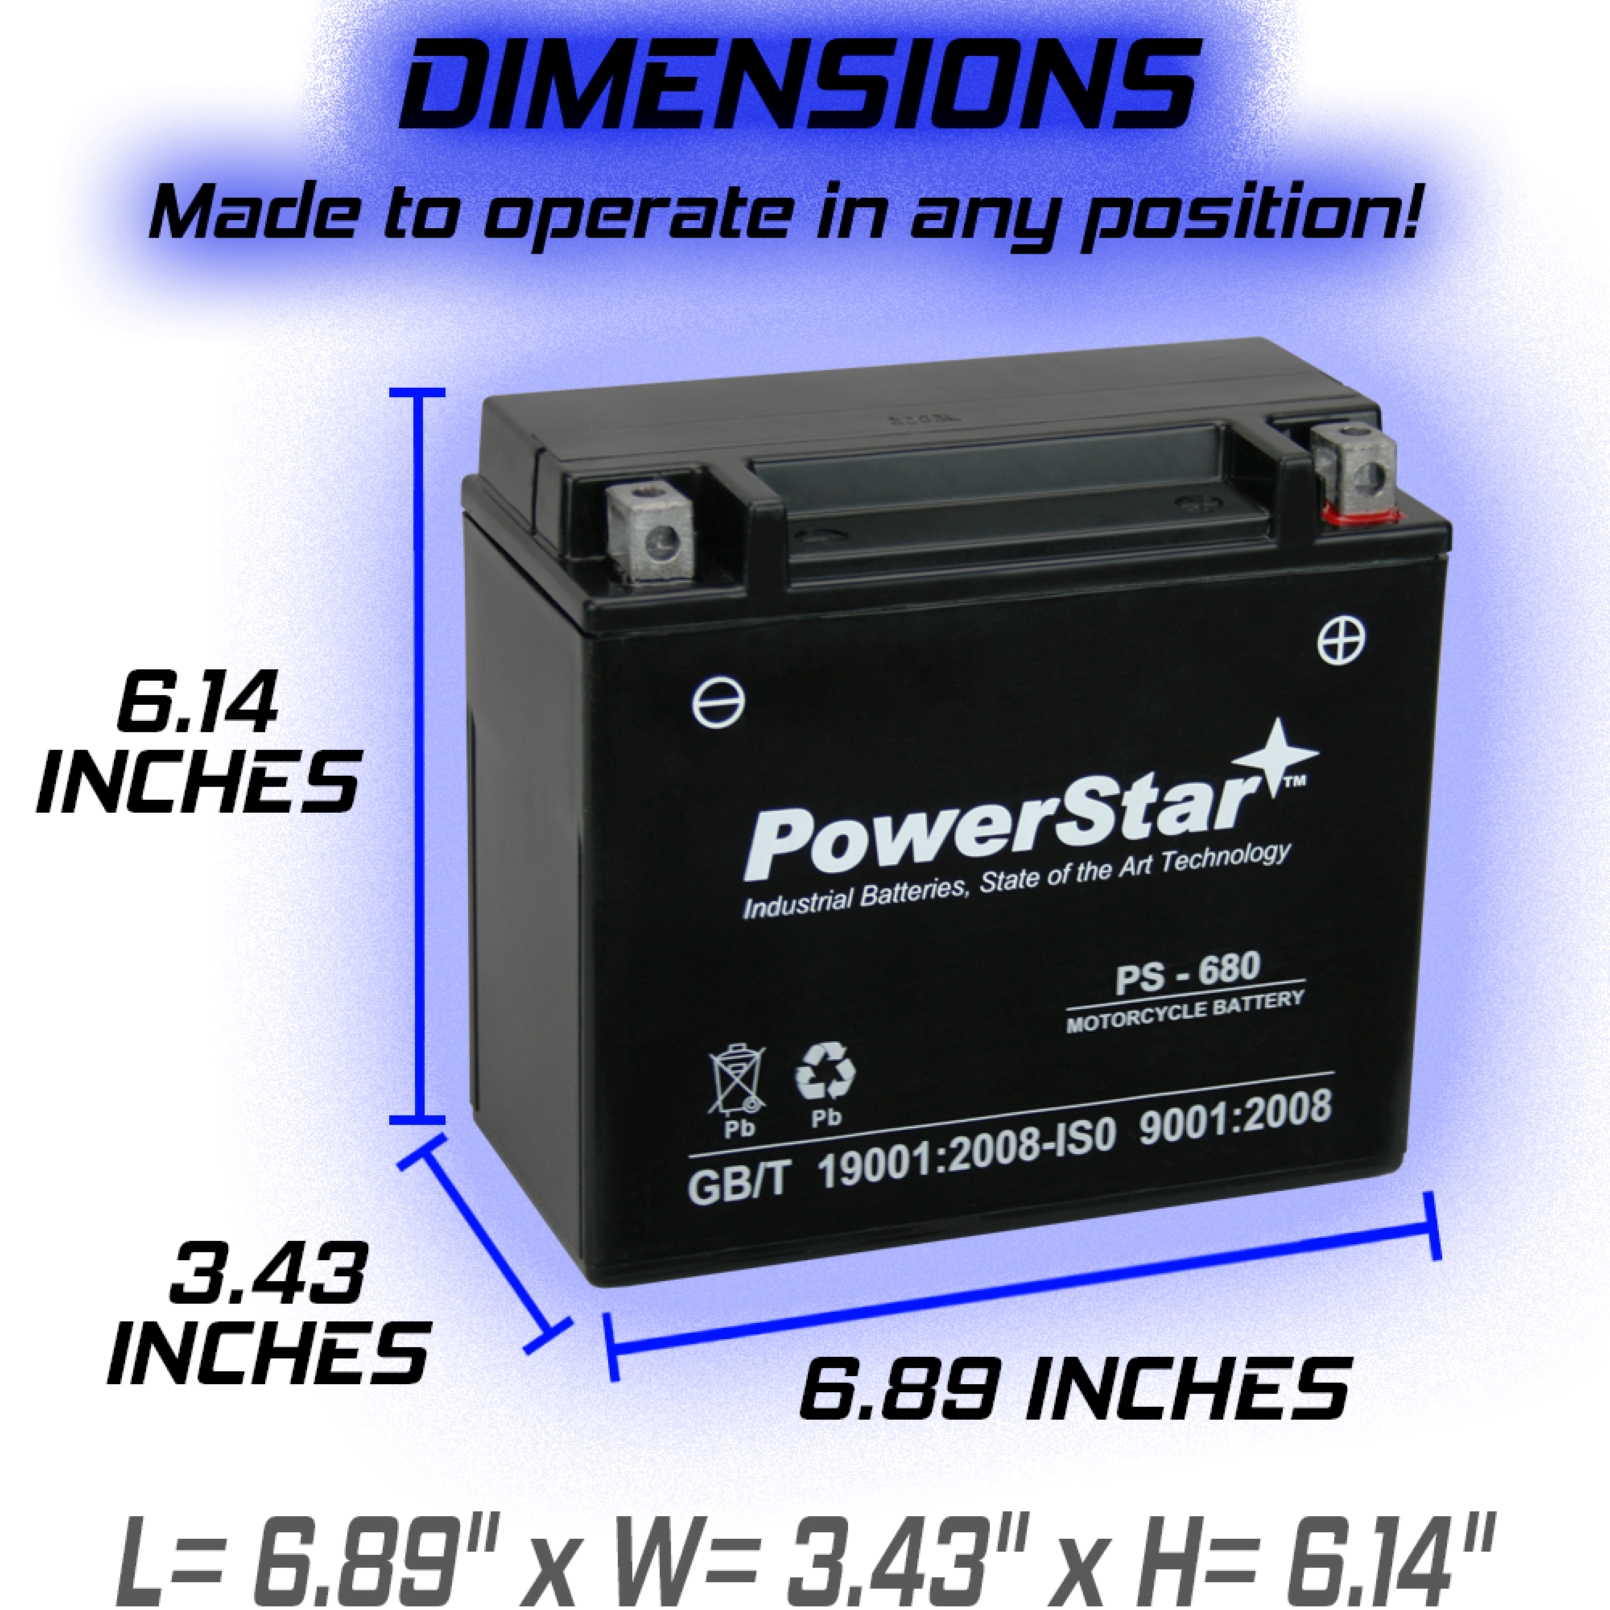 PowerStar PS-680 Utv Battery Compatible with PolarisRanger RZR 800 2008 to 2009